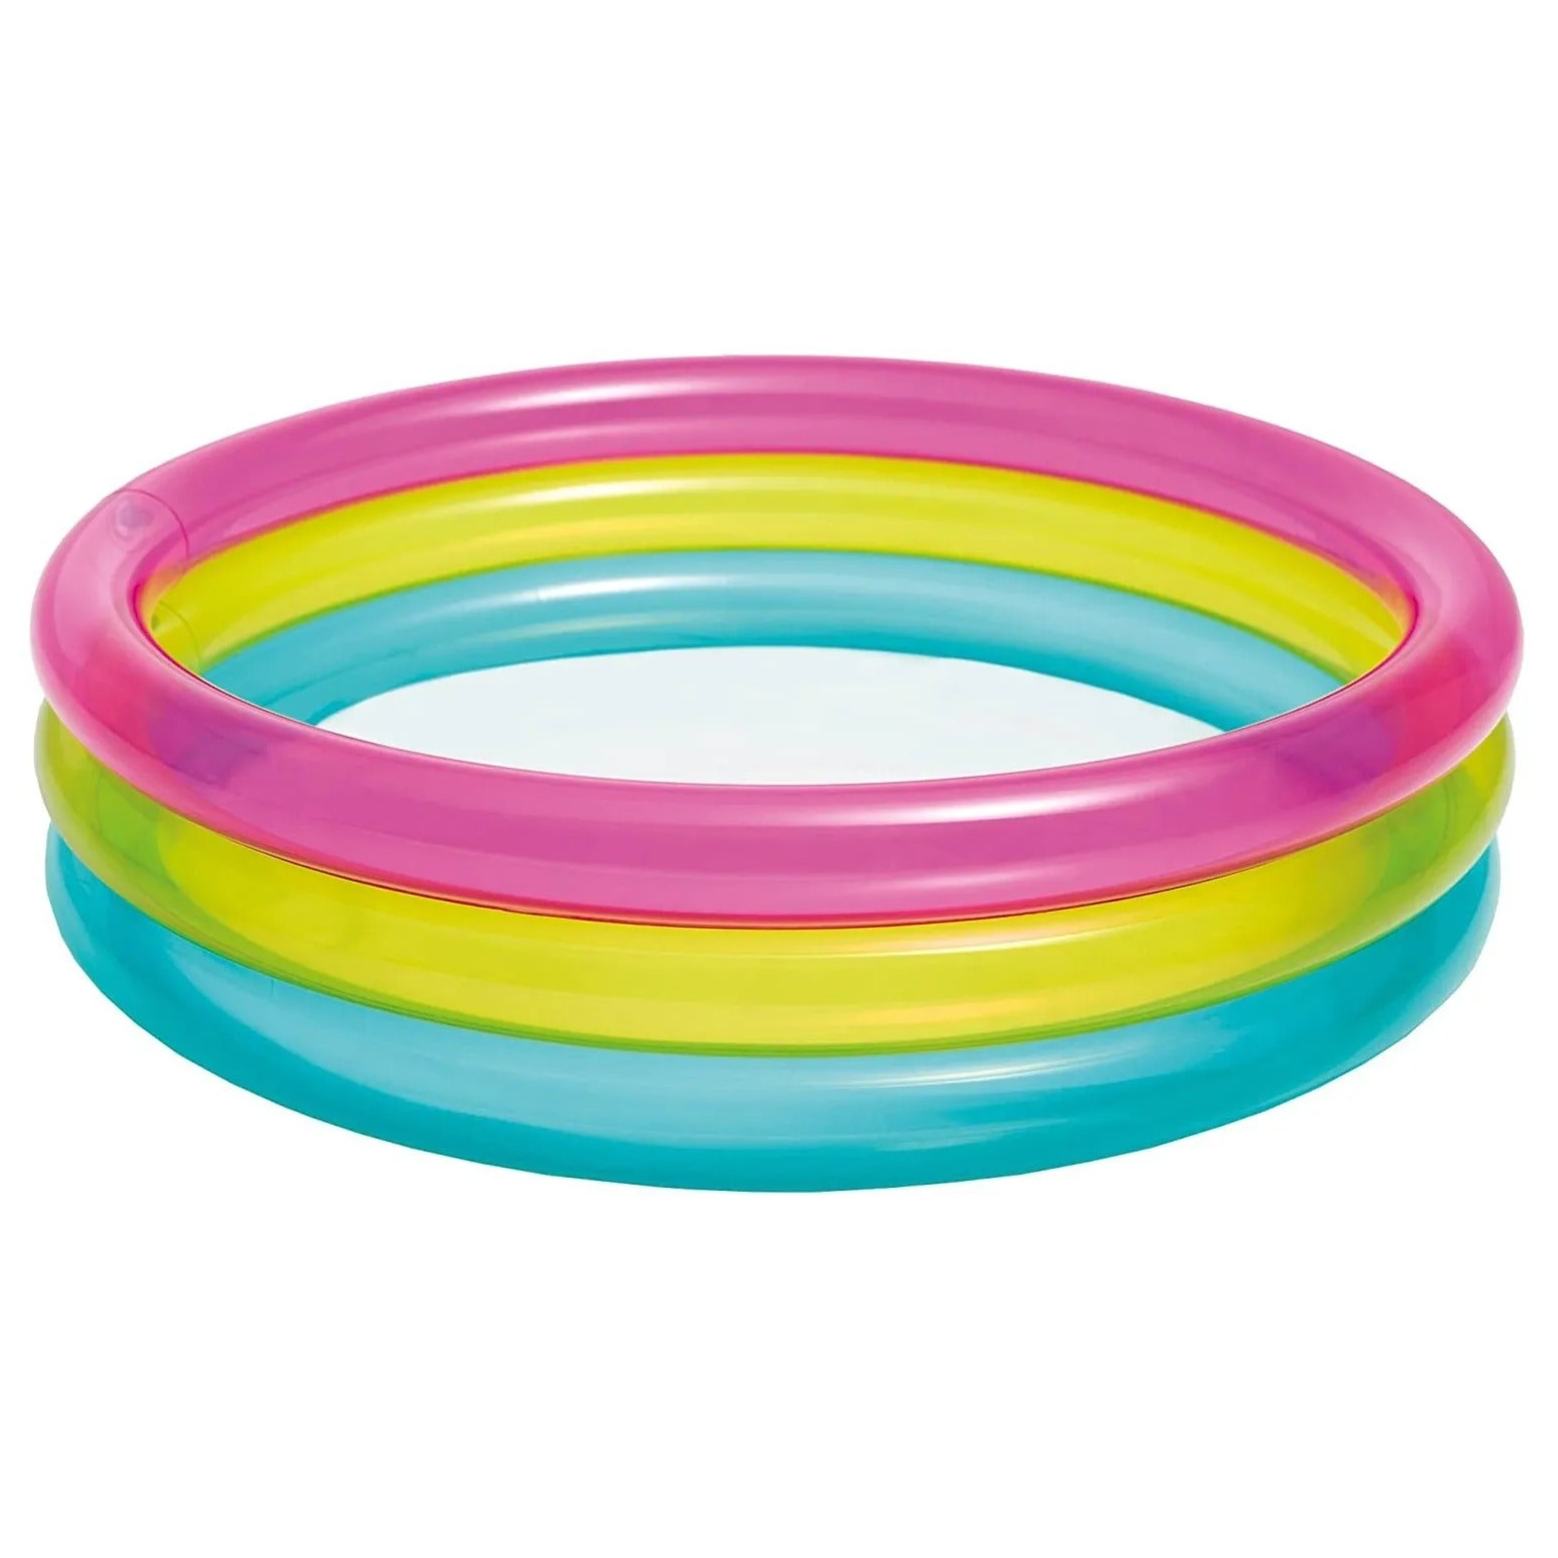 Intex - Rainbow Baby Pool - Multicolor - (L 60.96 x B 22.86 cm)